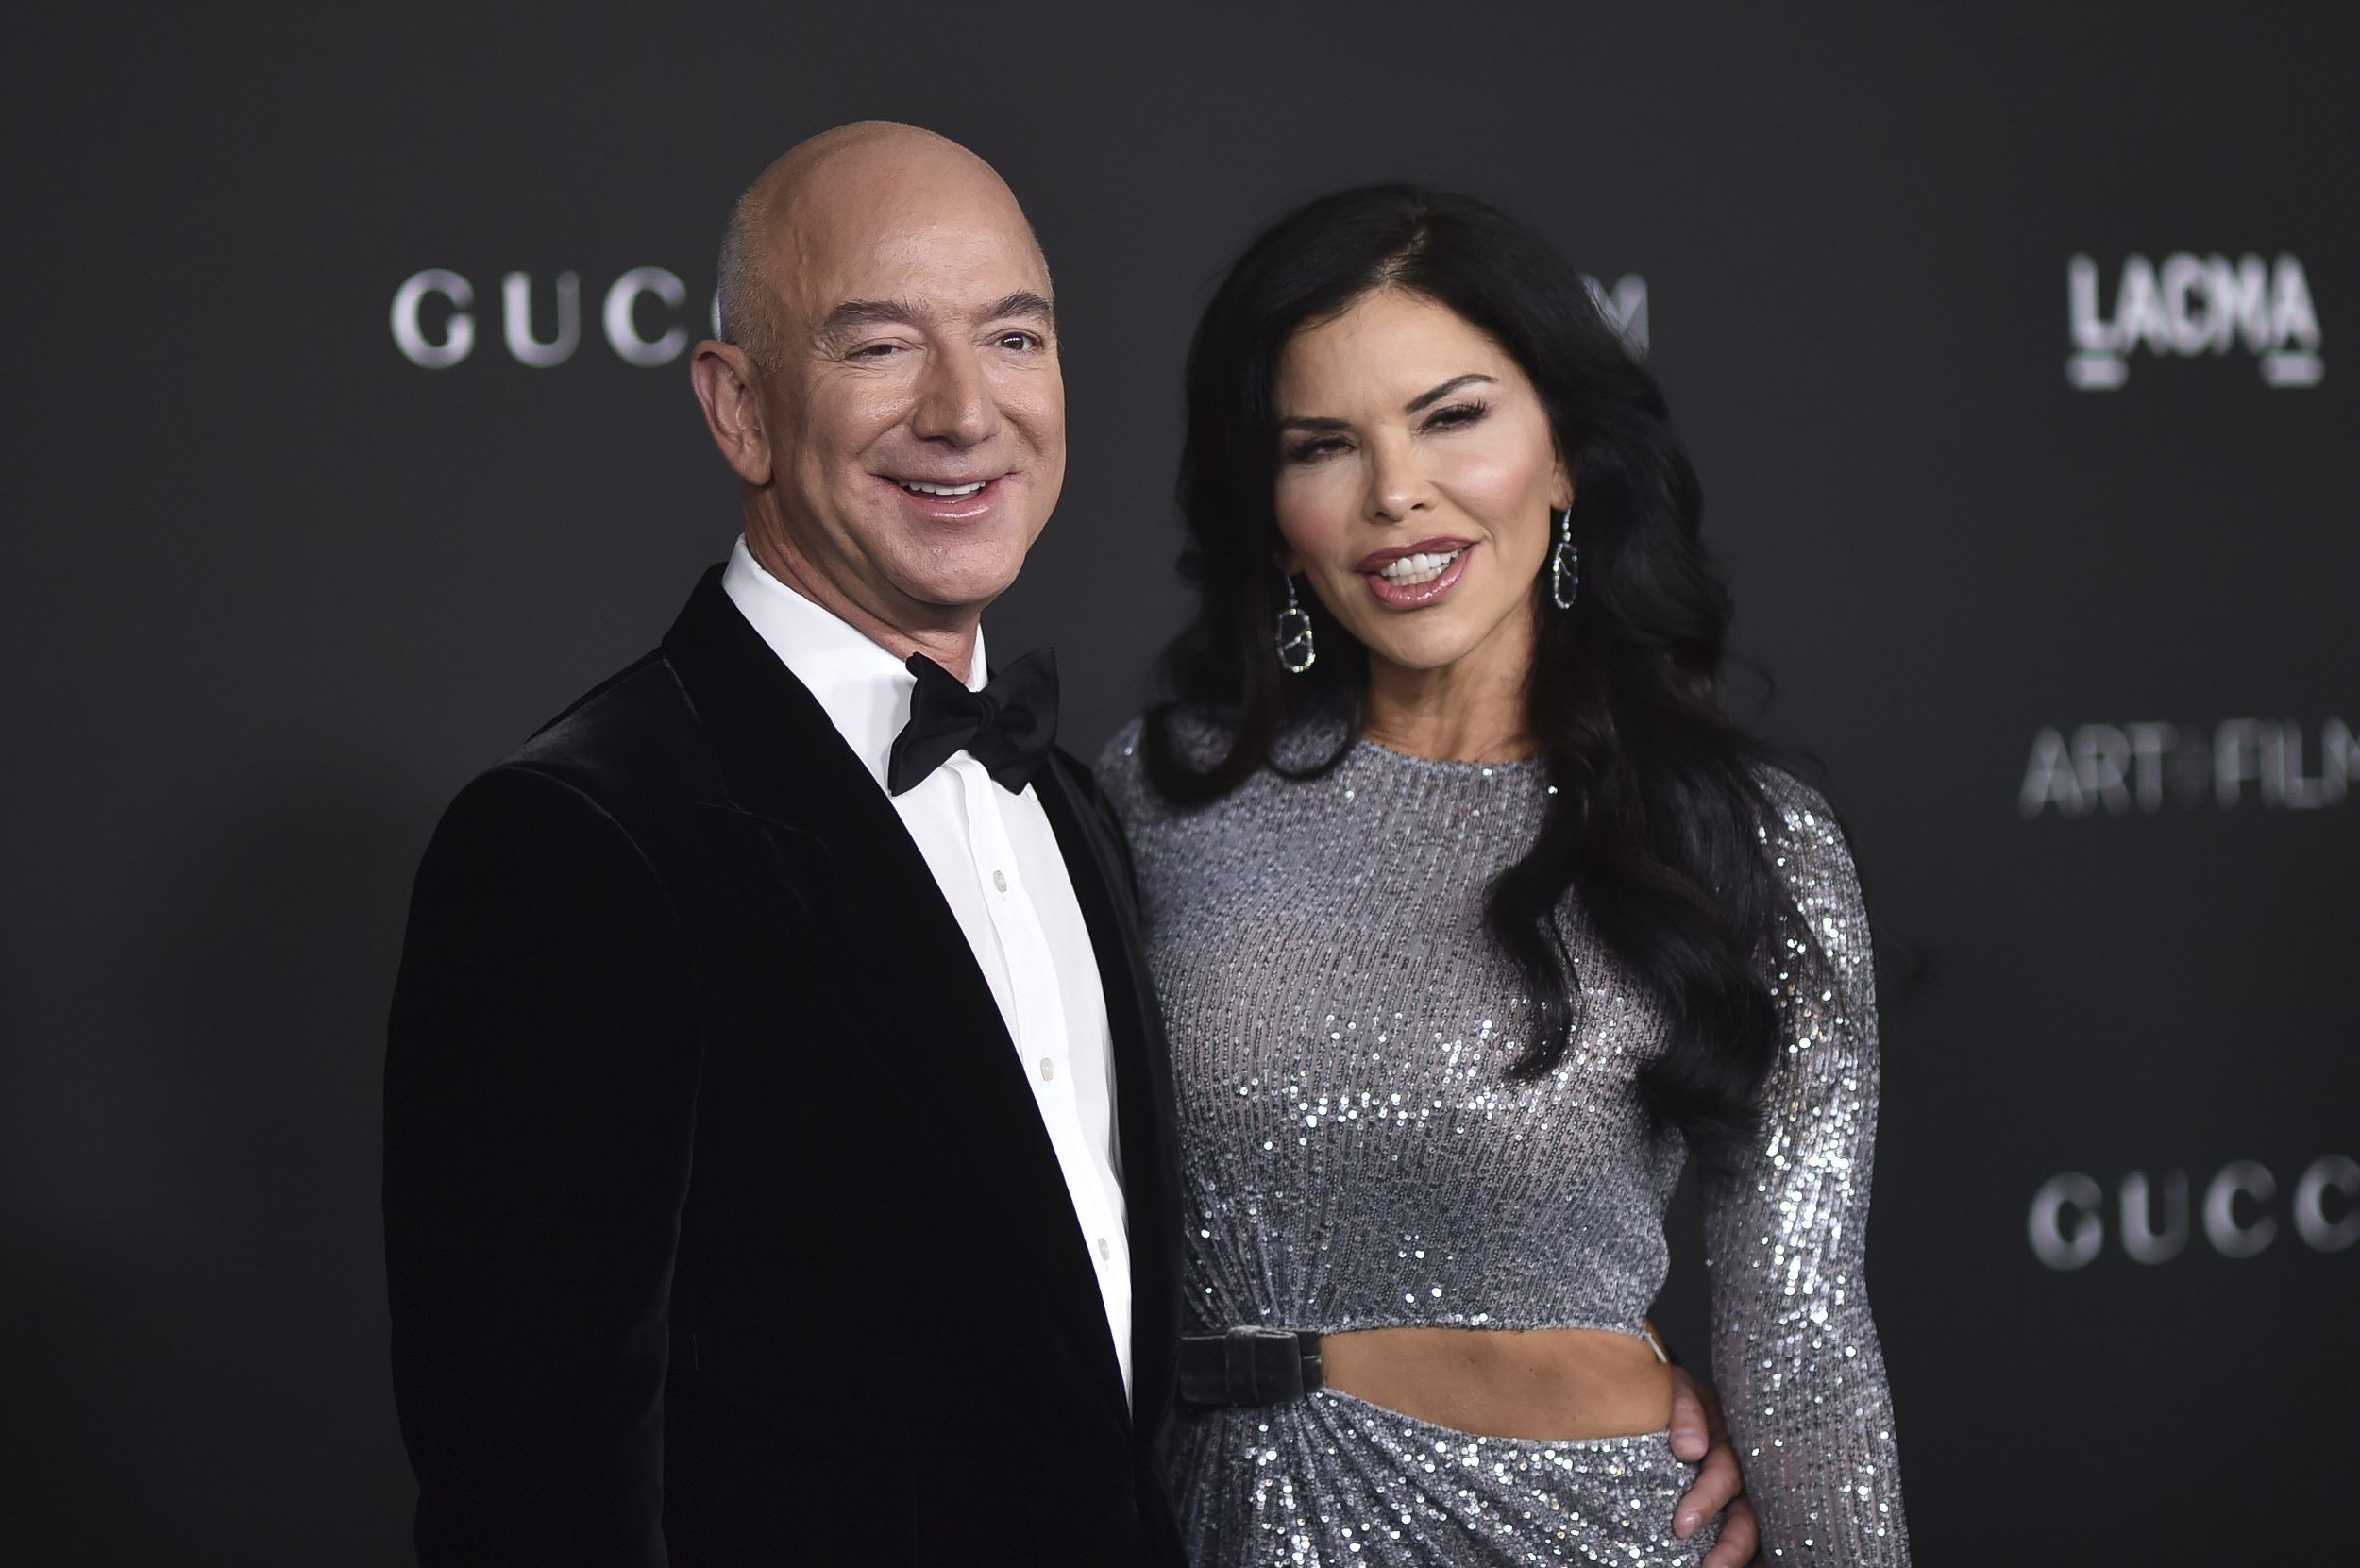 Lauren Sanchez and Jeff Bezos mocked over Vogue pics | Montreal Gazette